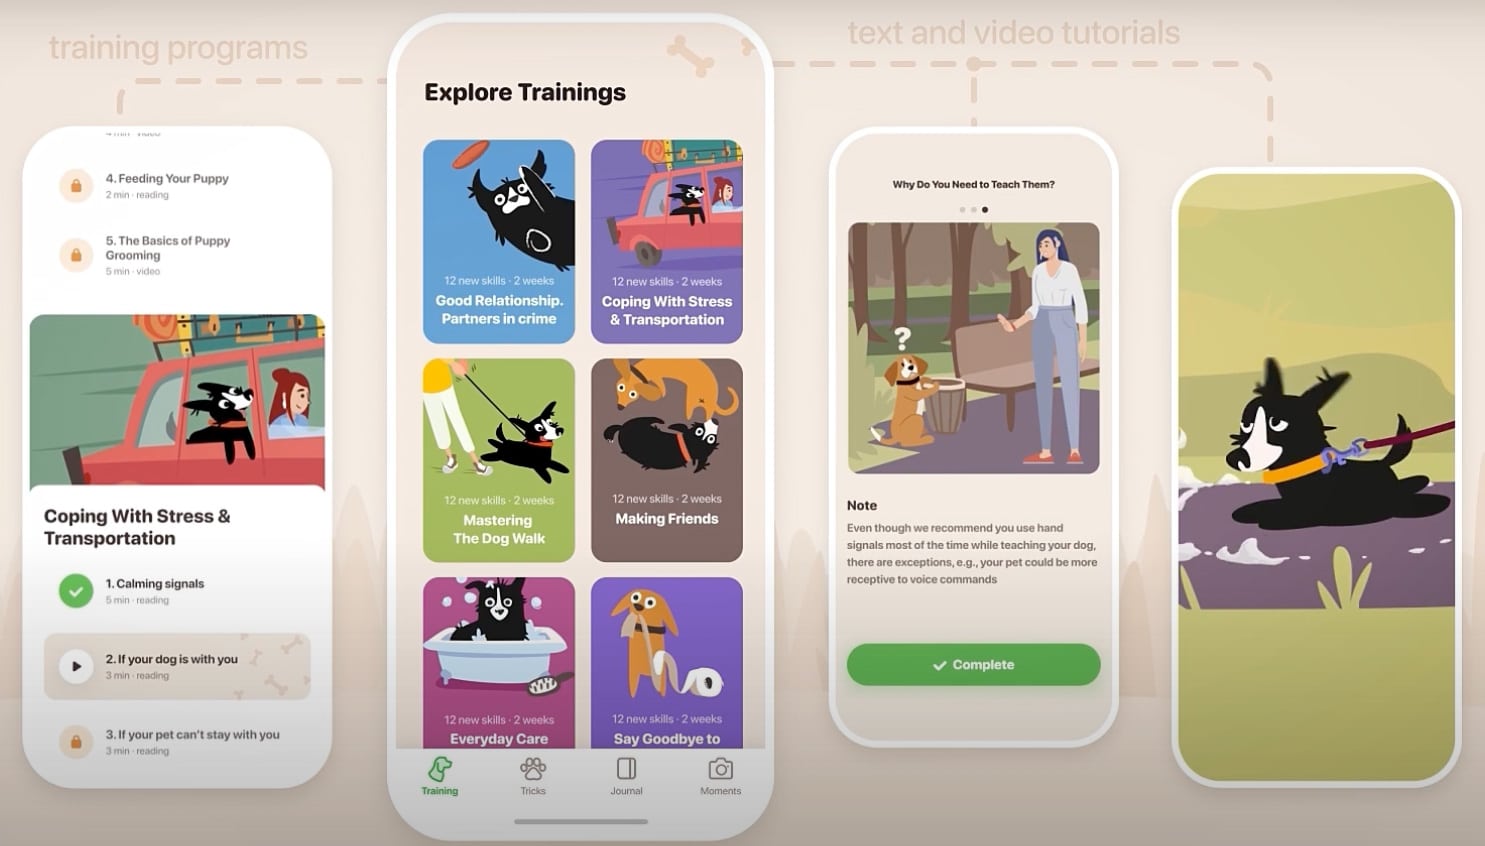 woofz dog training app - explore trainings